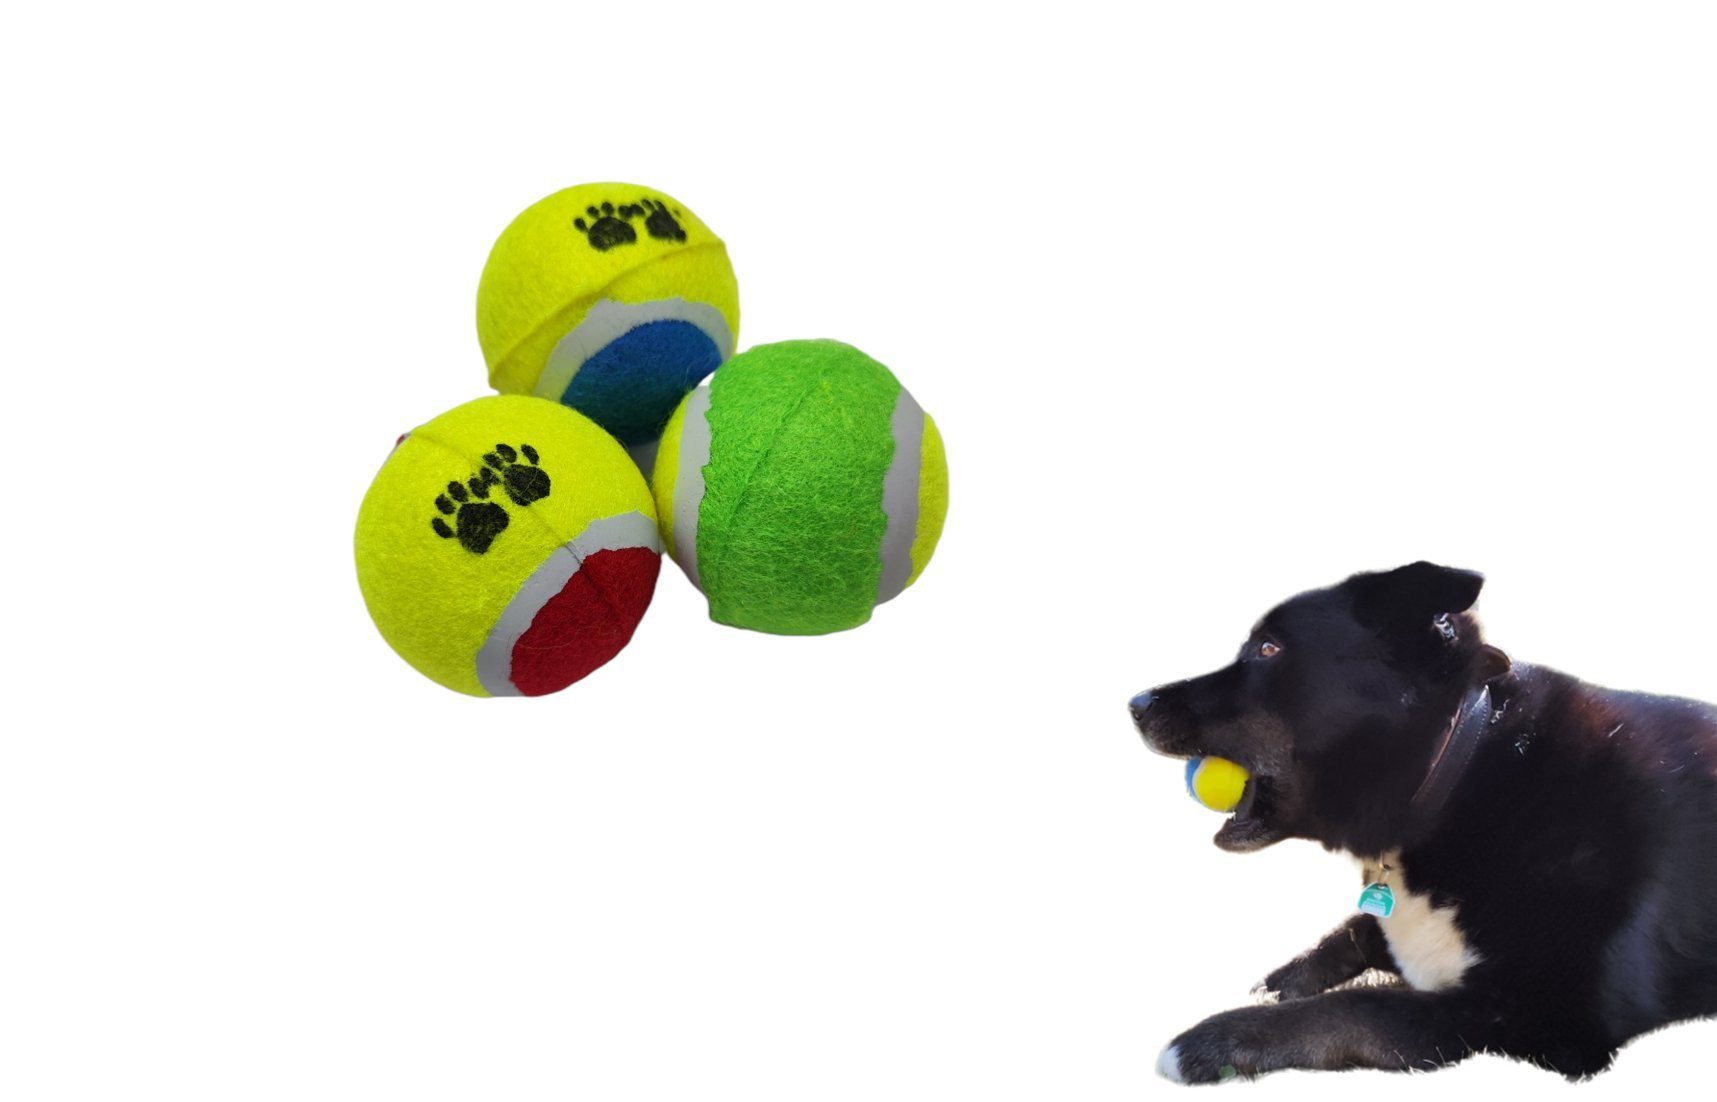 HMH-Shop Tierball Hundebälle bunt Hundespielzeug Haustier Katze Ball Spielen Hund Tennisball Dog Toys Hundeball Spaß Agility Training Ausdauer auspowern Tennisbälle Ø ~6,5cm Helle Farben gut auffindbar, Helle Farben, gut auffindbar 12 Bälle